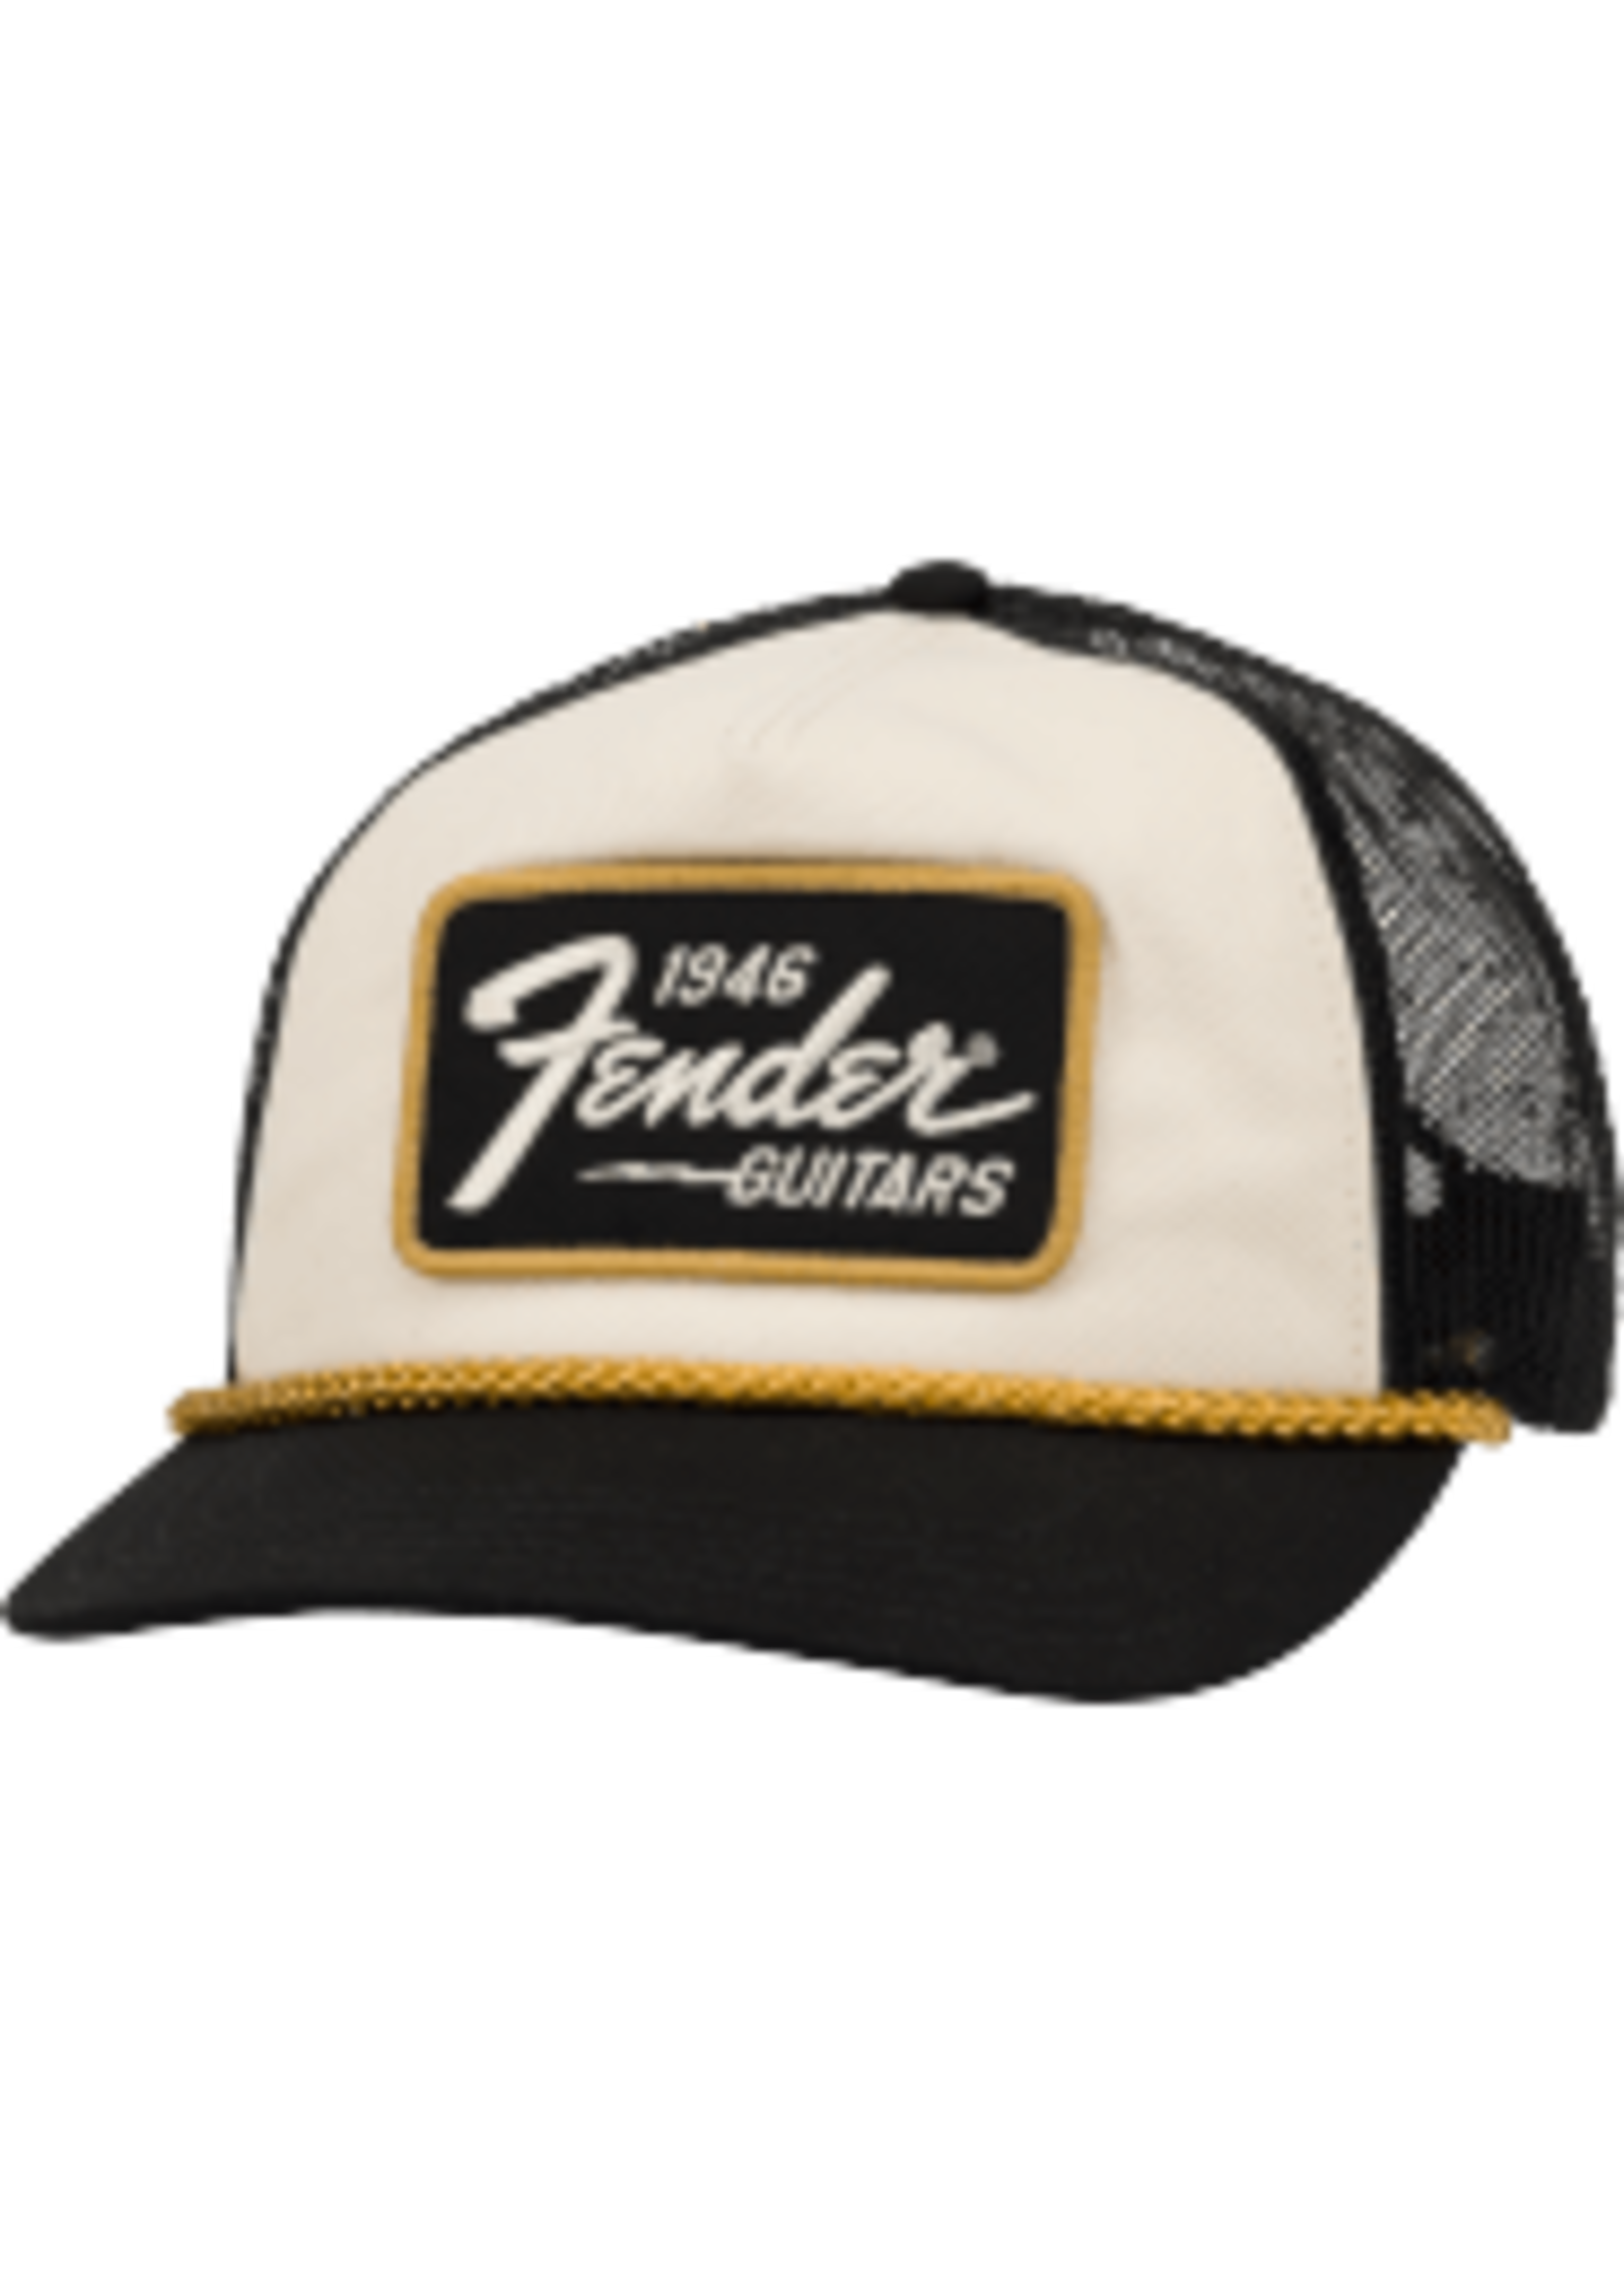 Fender Fender 9122421201 1946 Gold Braid Hat Cream/Black